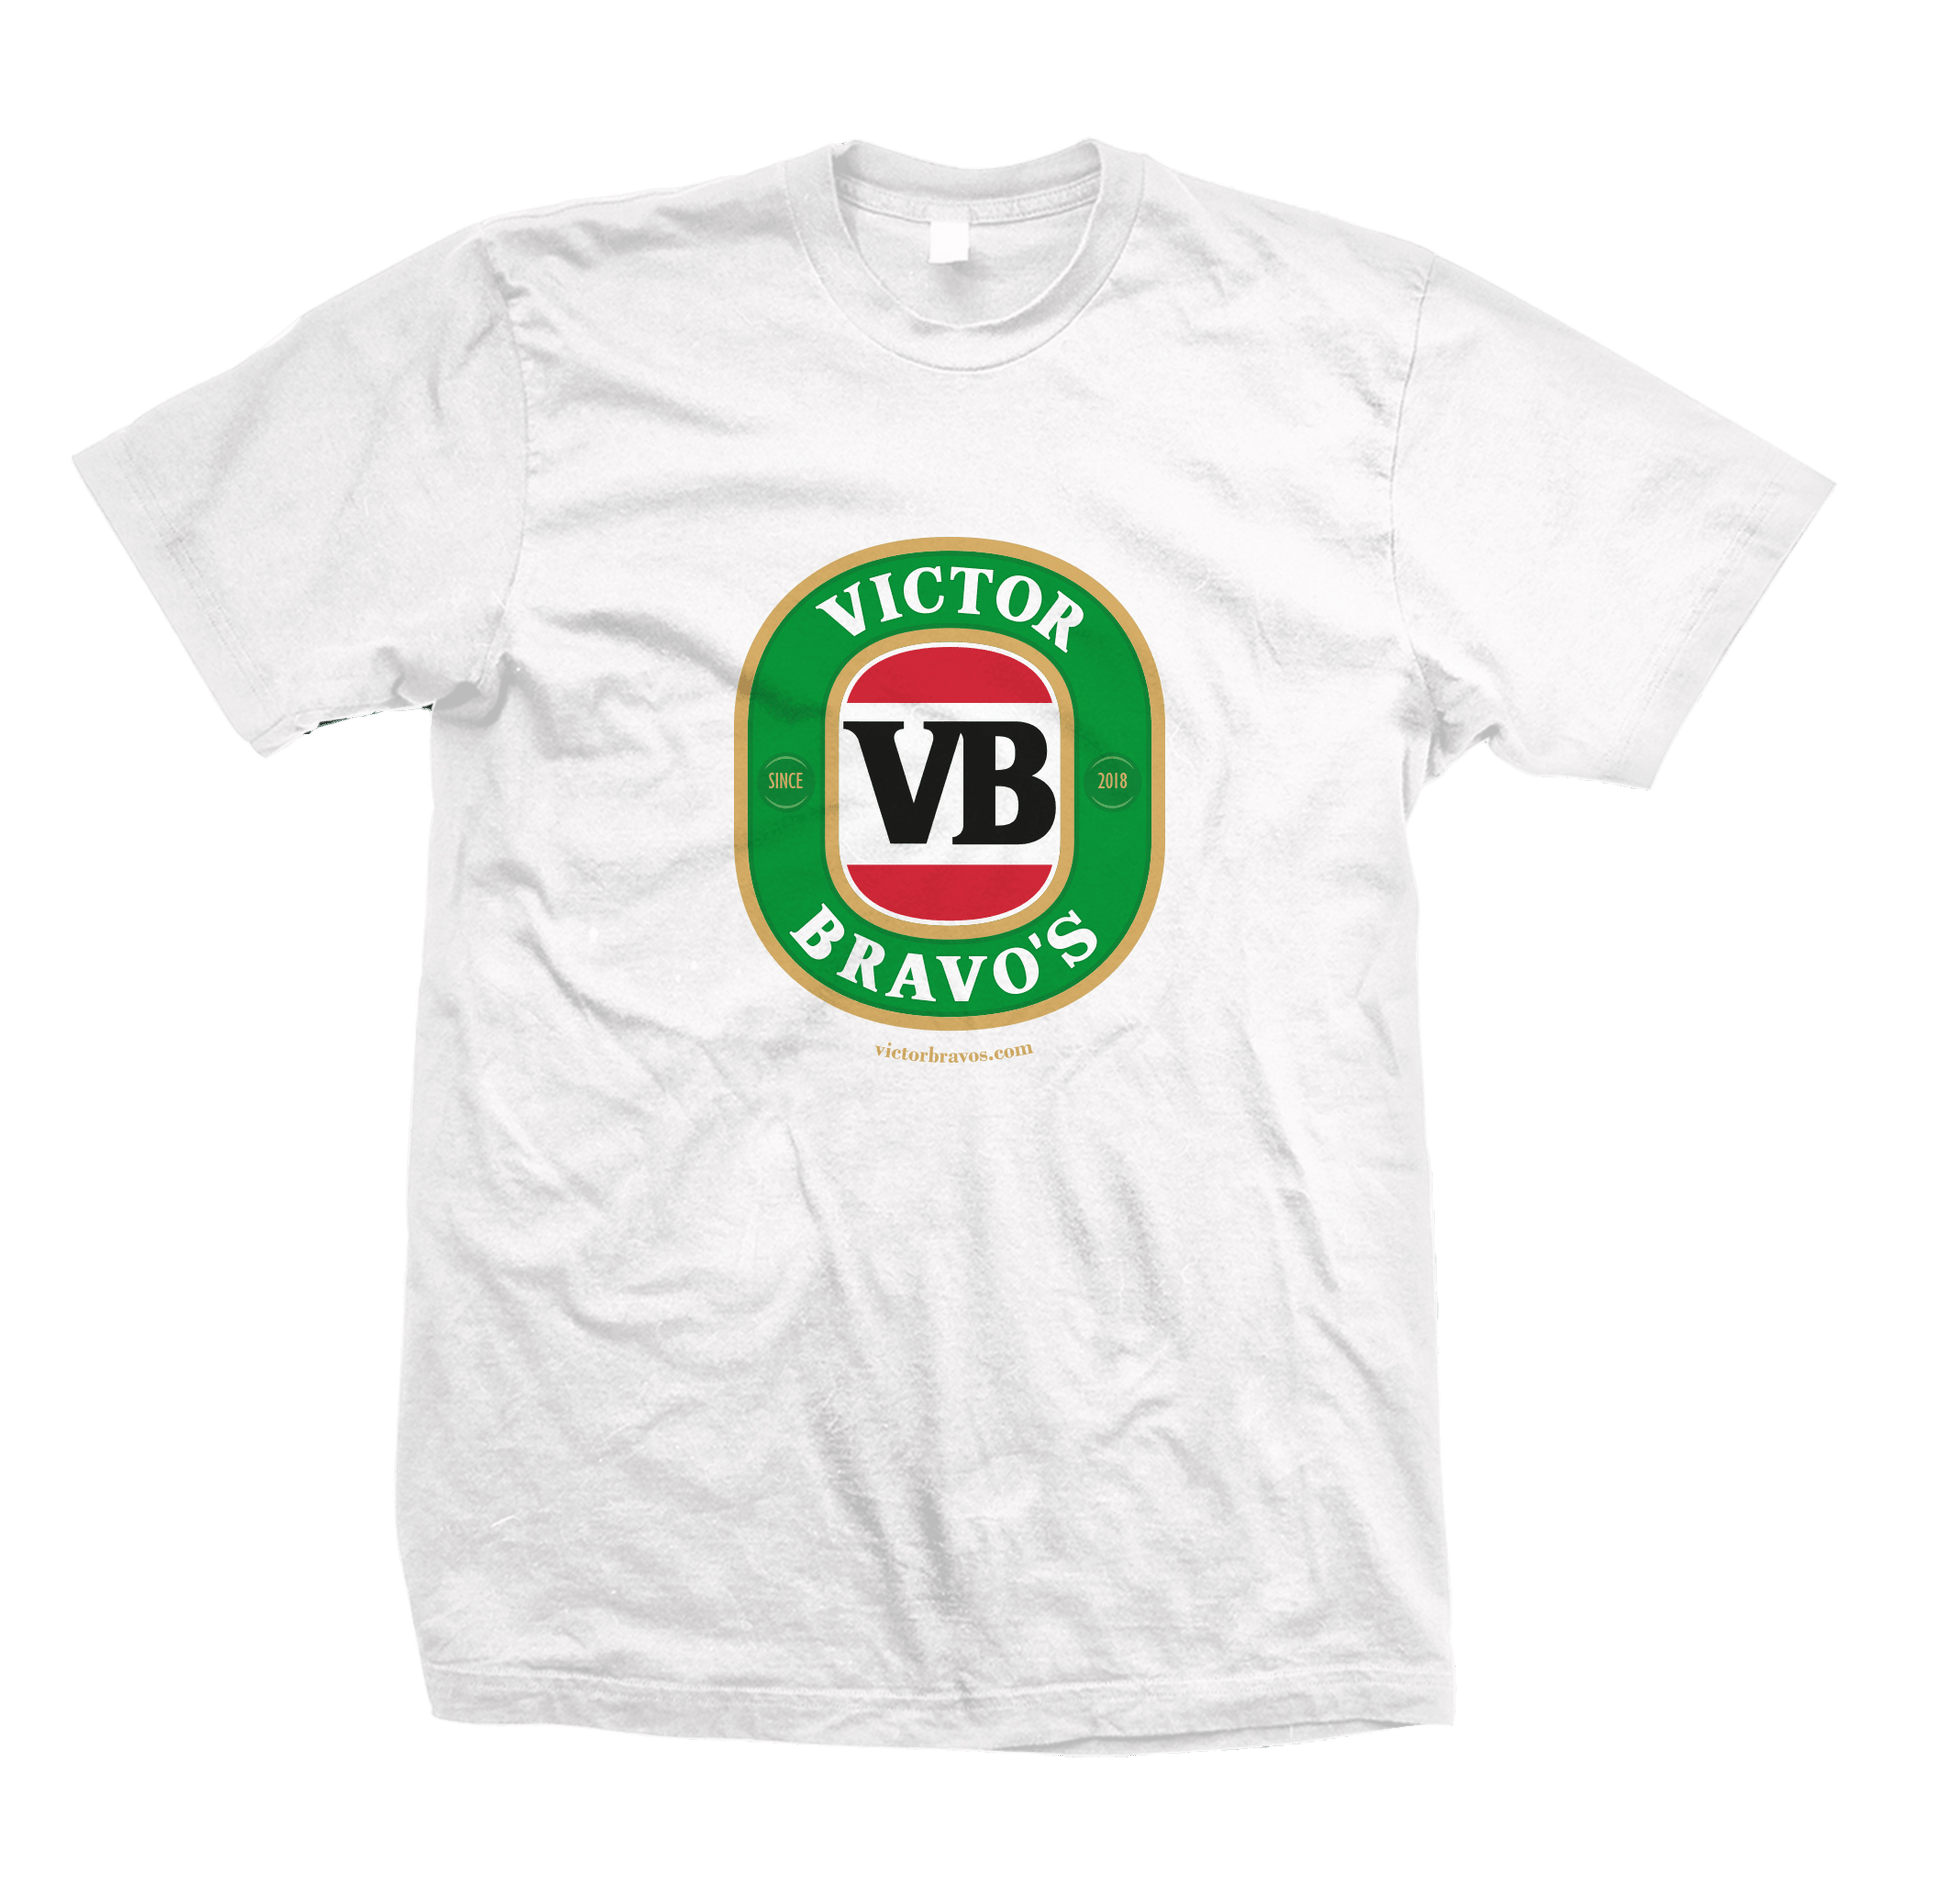 Victor Bravo's T-Shirts The Classic T-Shirt White S/S